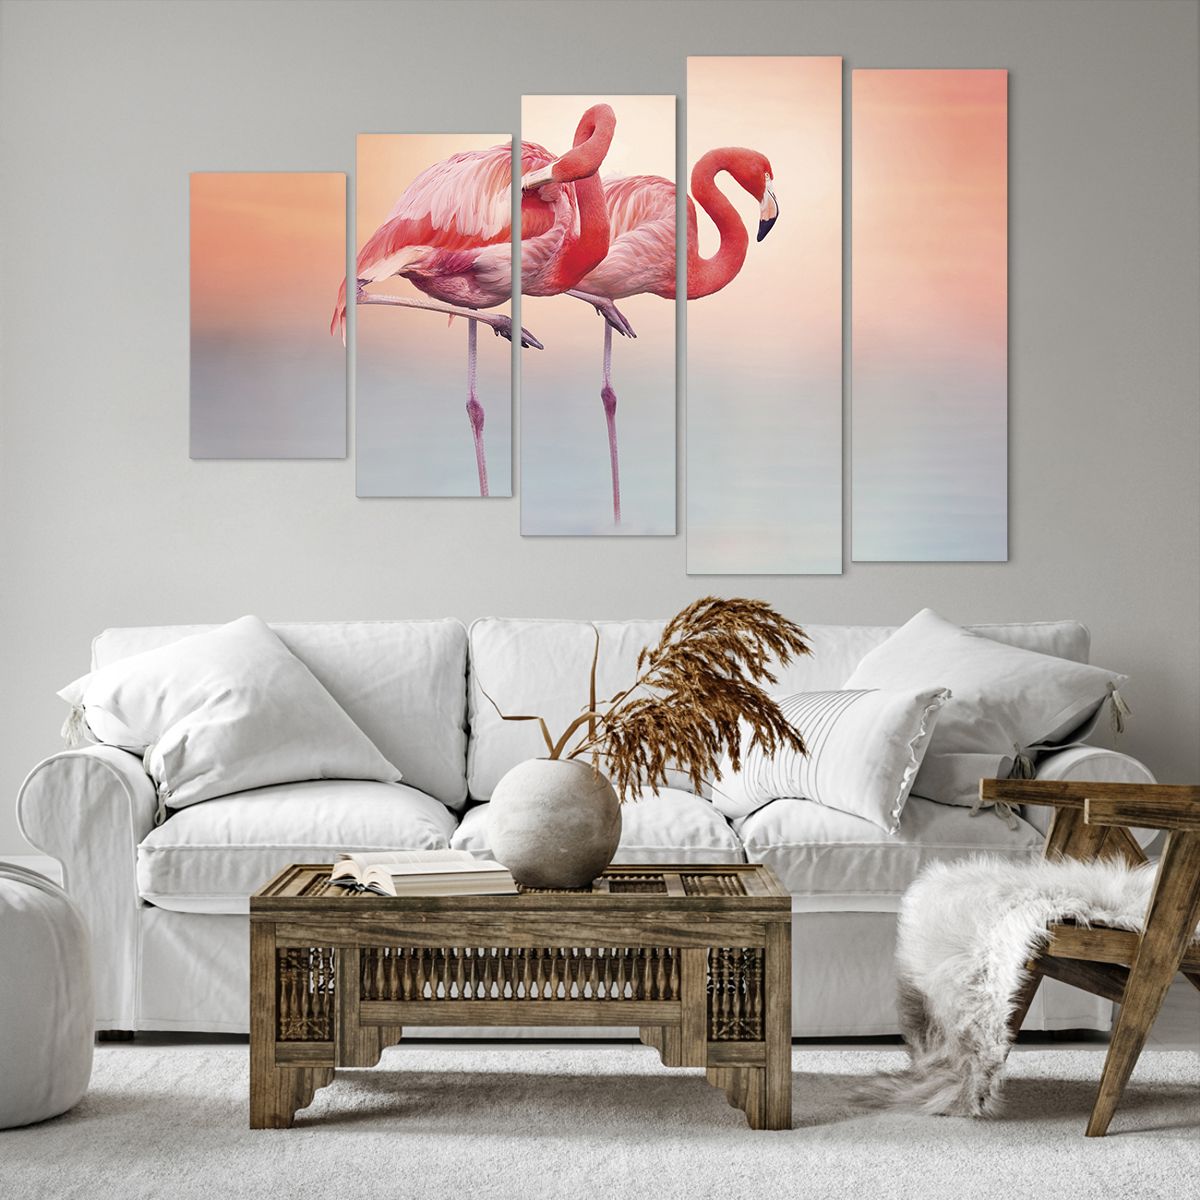 Bild auf Leinwand Flamingos, Bild auf Leinwand Die Vögel, Bild auf Leinwand Natur, Bild auf Leinwand Tiere, Bild auf Leinwand Pastellfarben